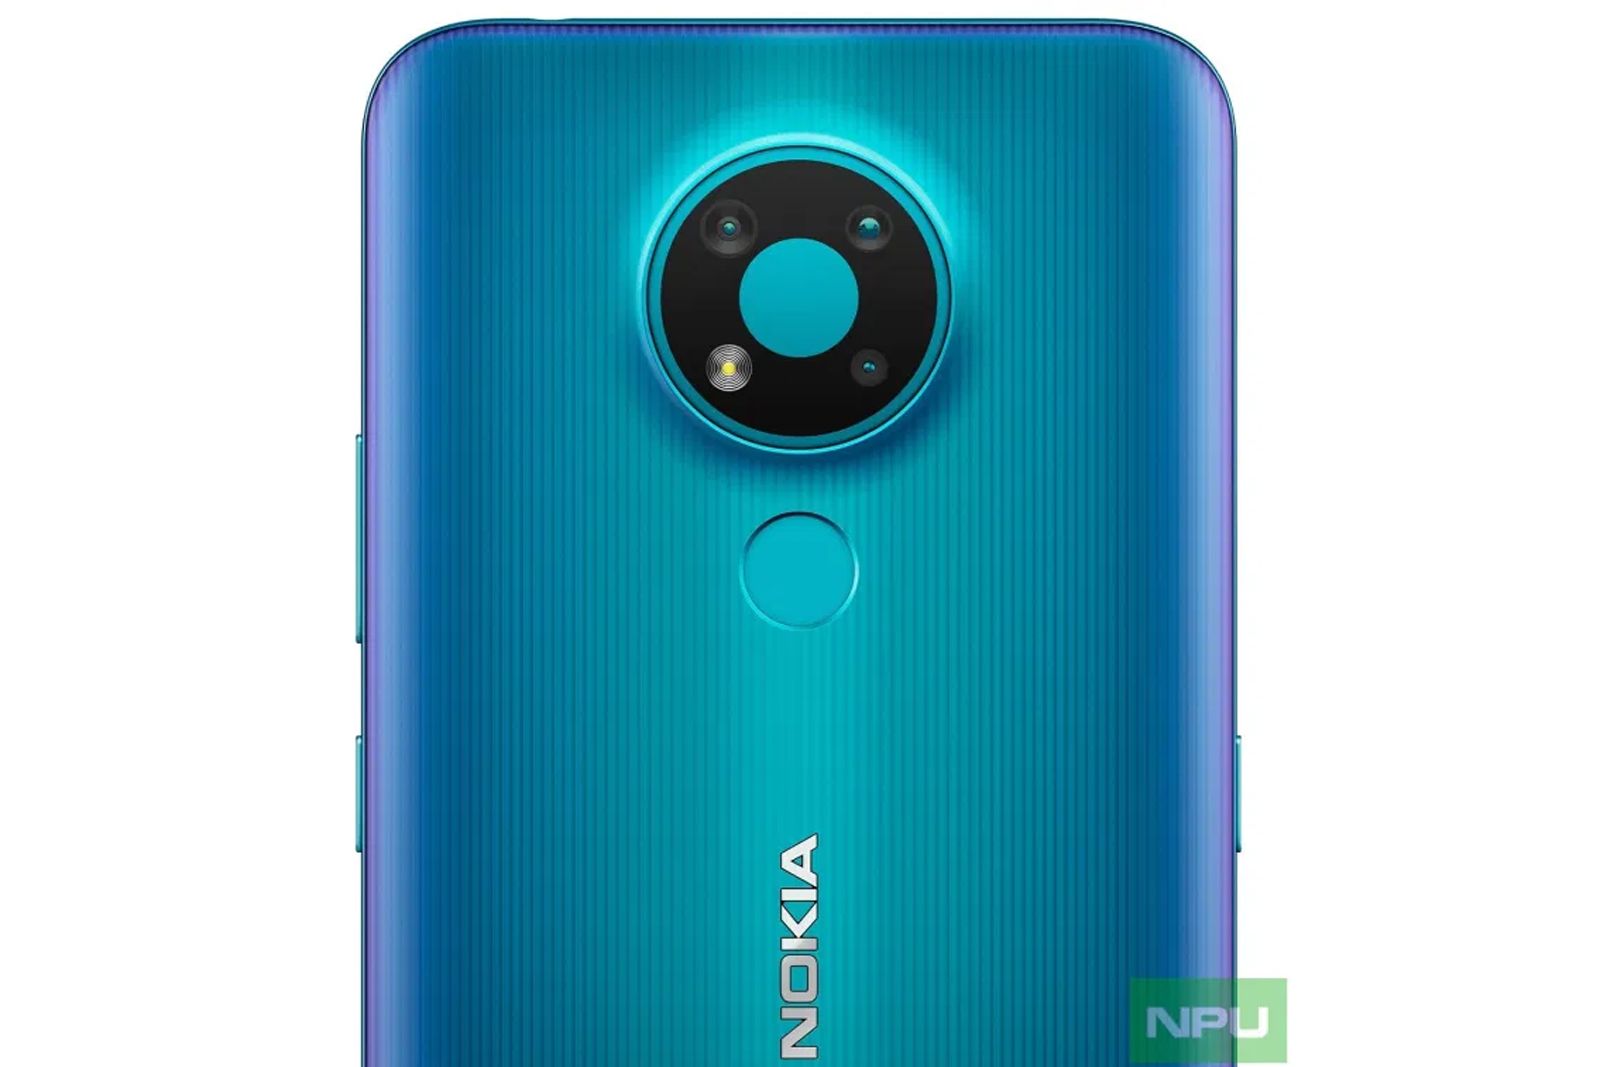 Nokia X20 passes through FCC, shows large circular camera housing photo 1